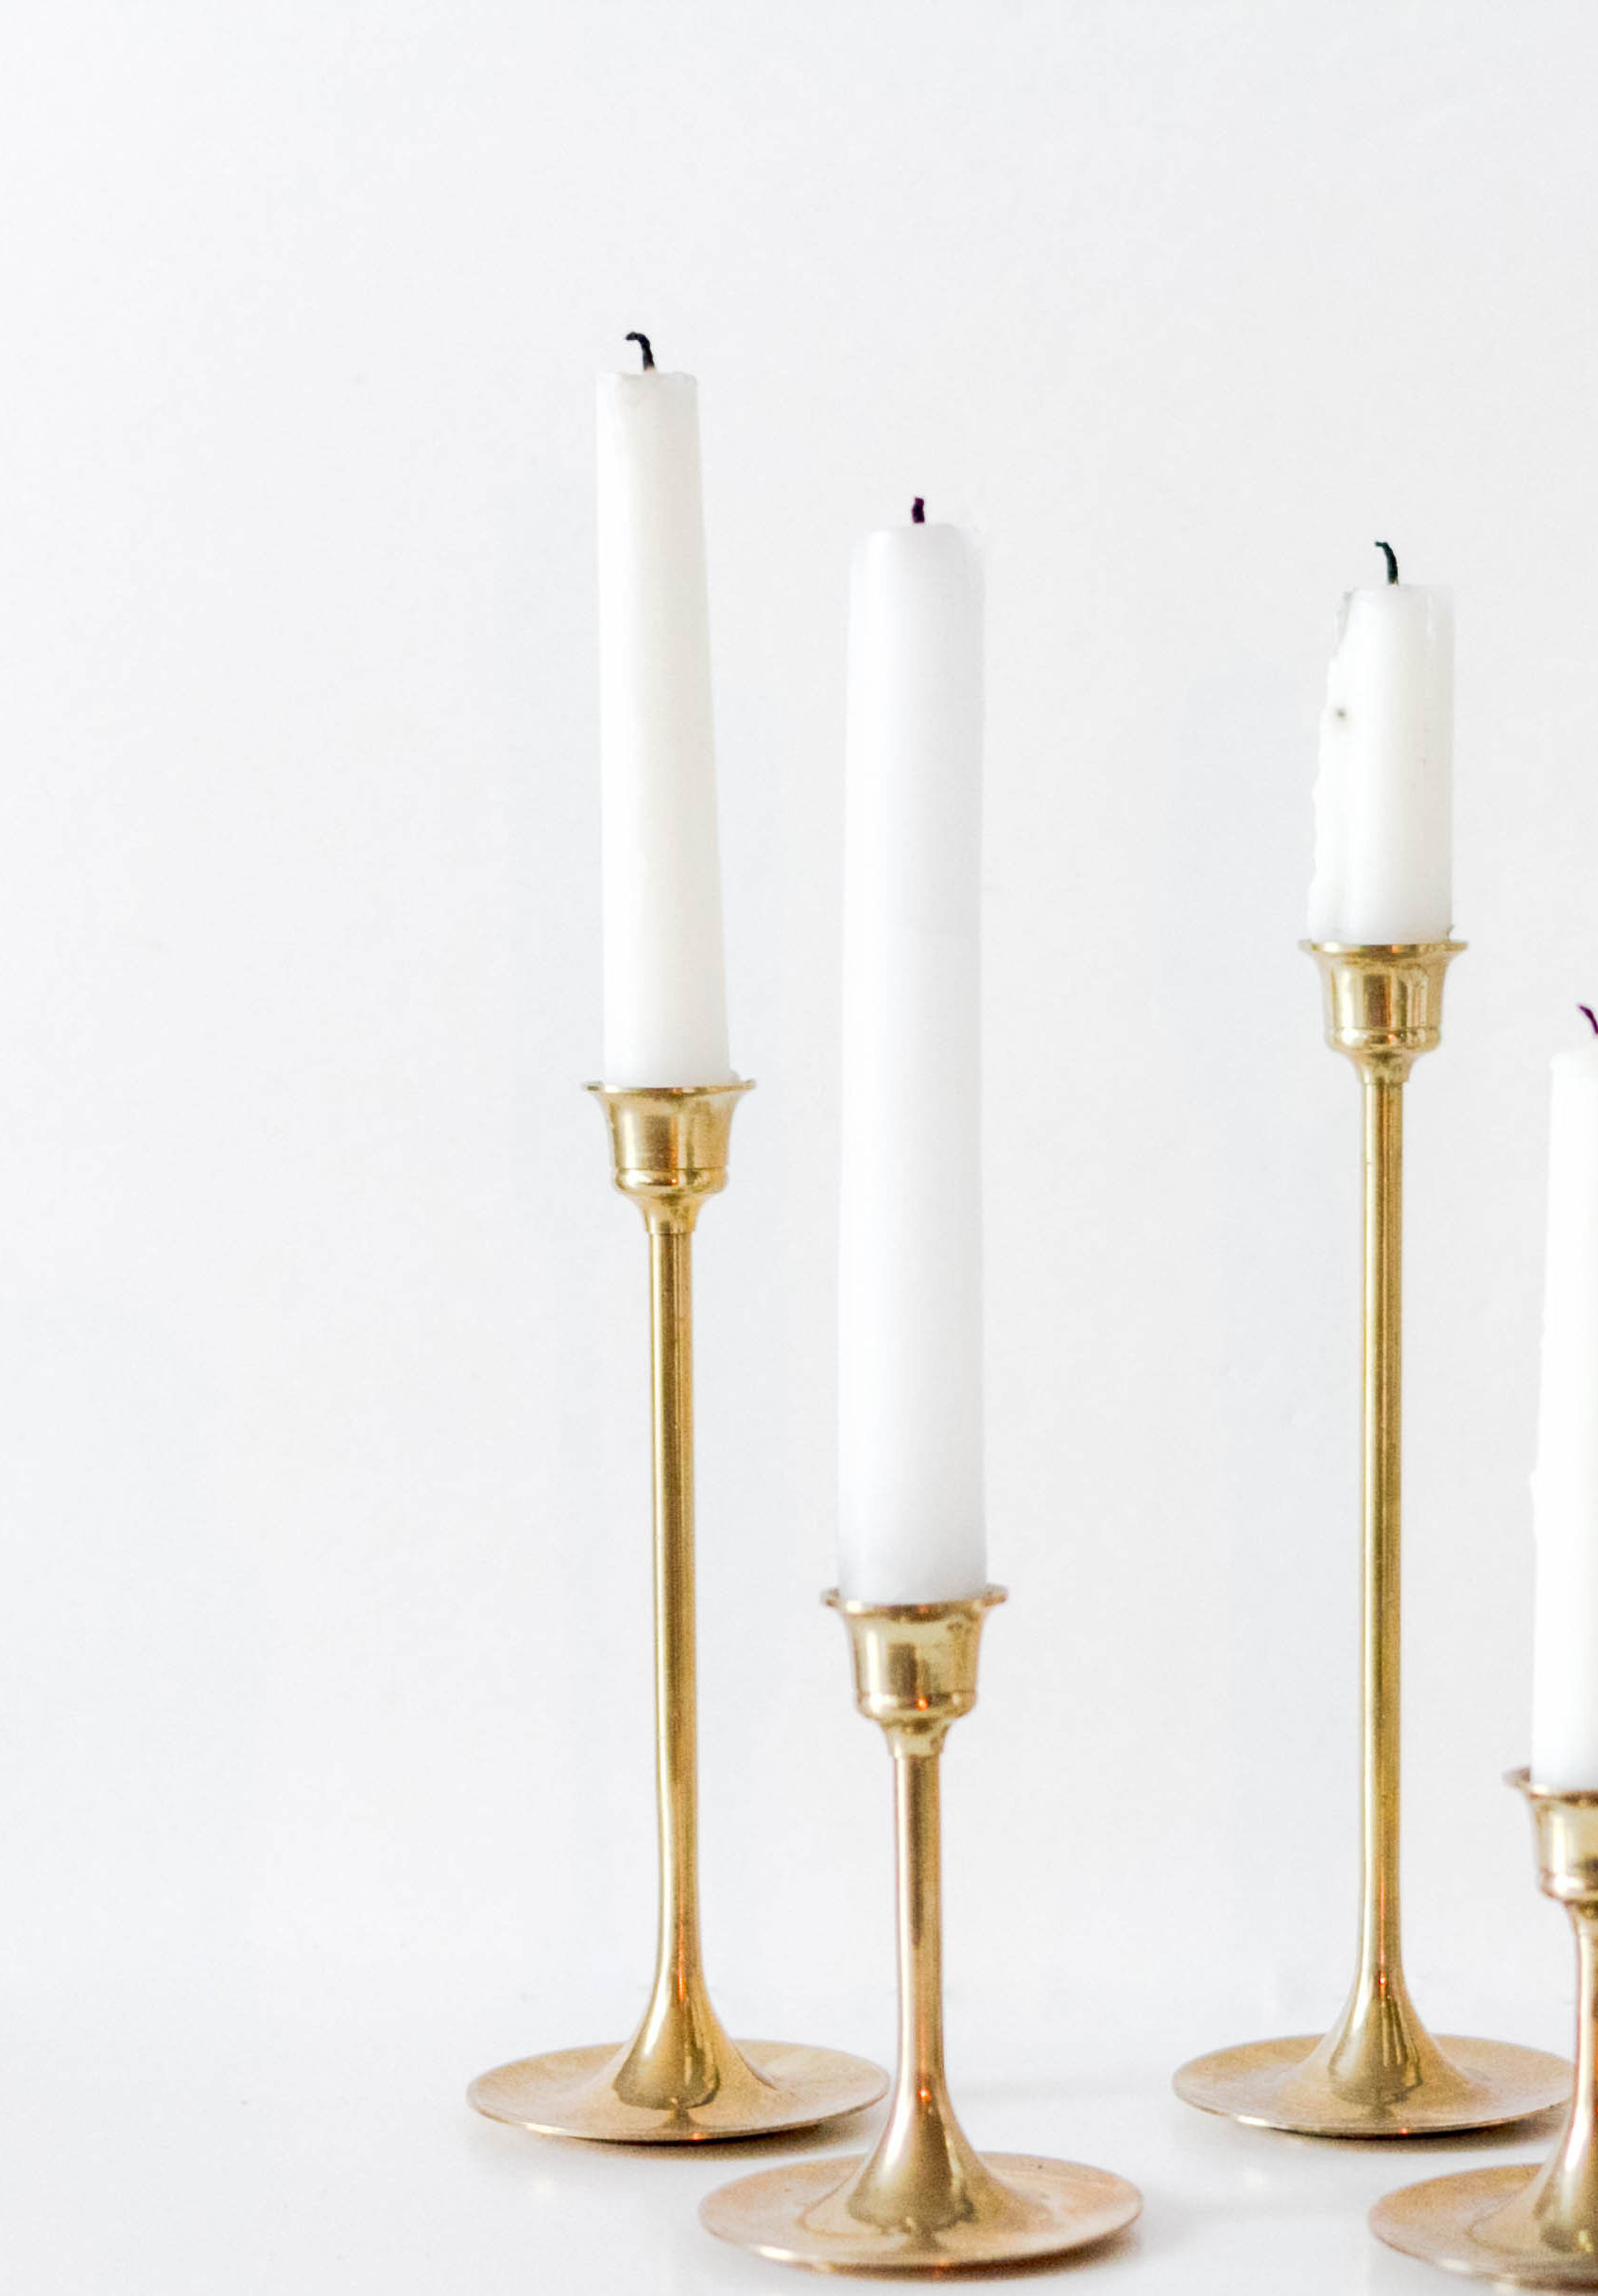 Thrifty Décor-Brass Candlesticks-IrisNacole.com